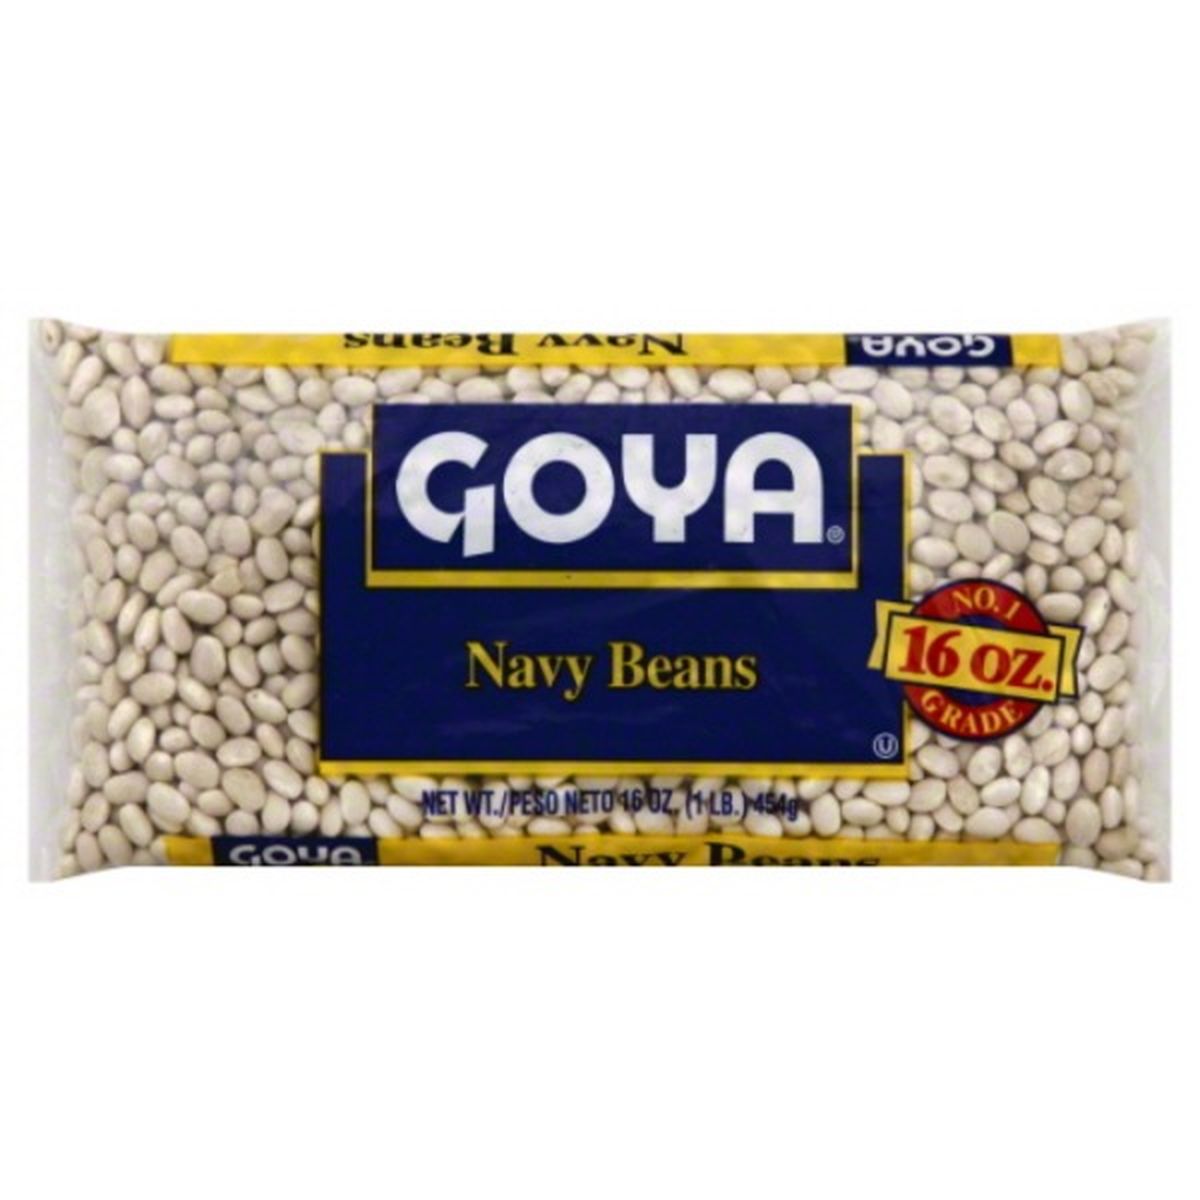 Calories in Goya Navy Beans